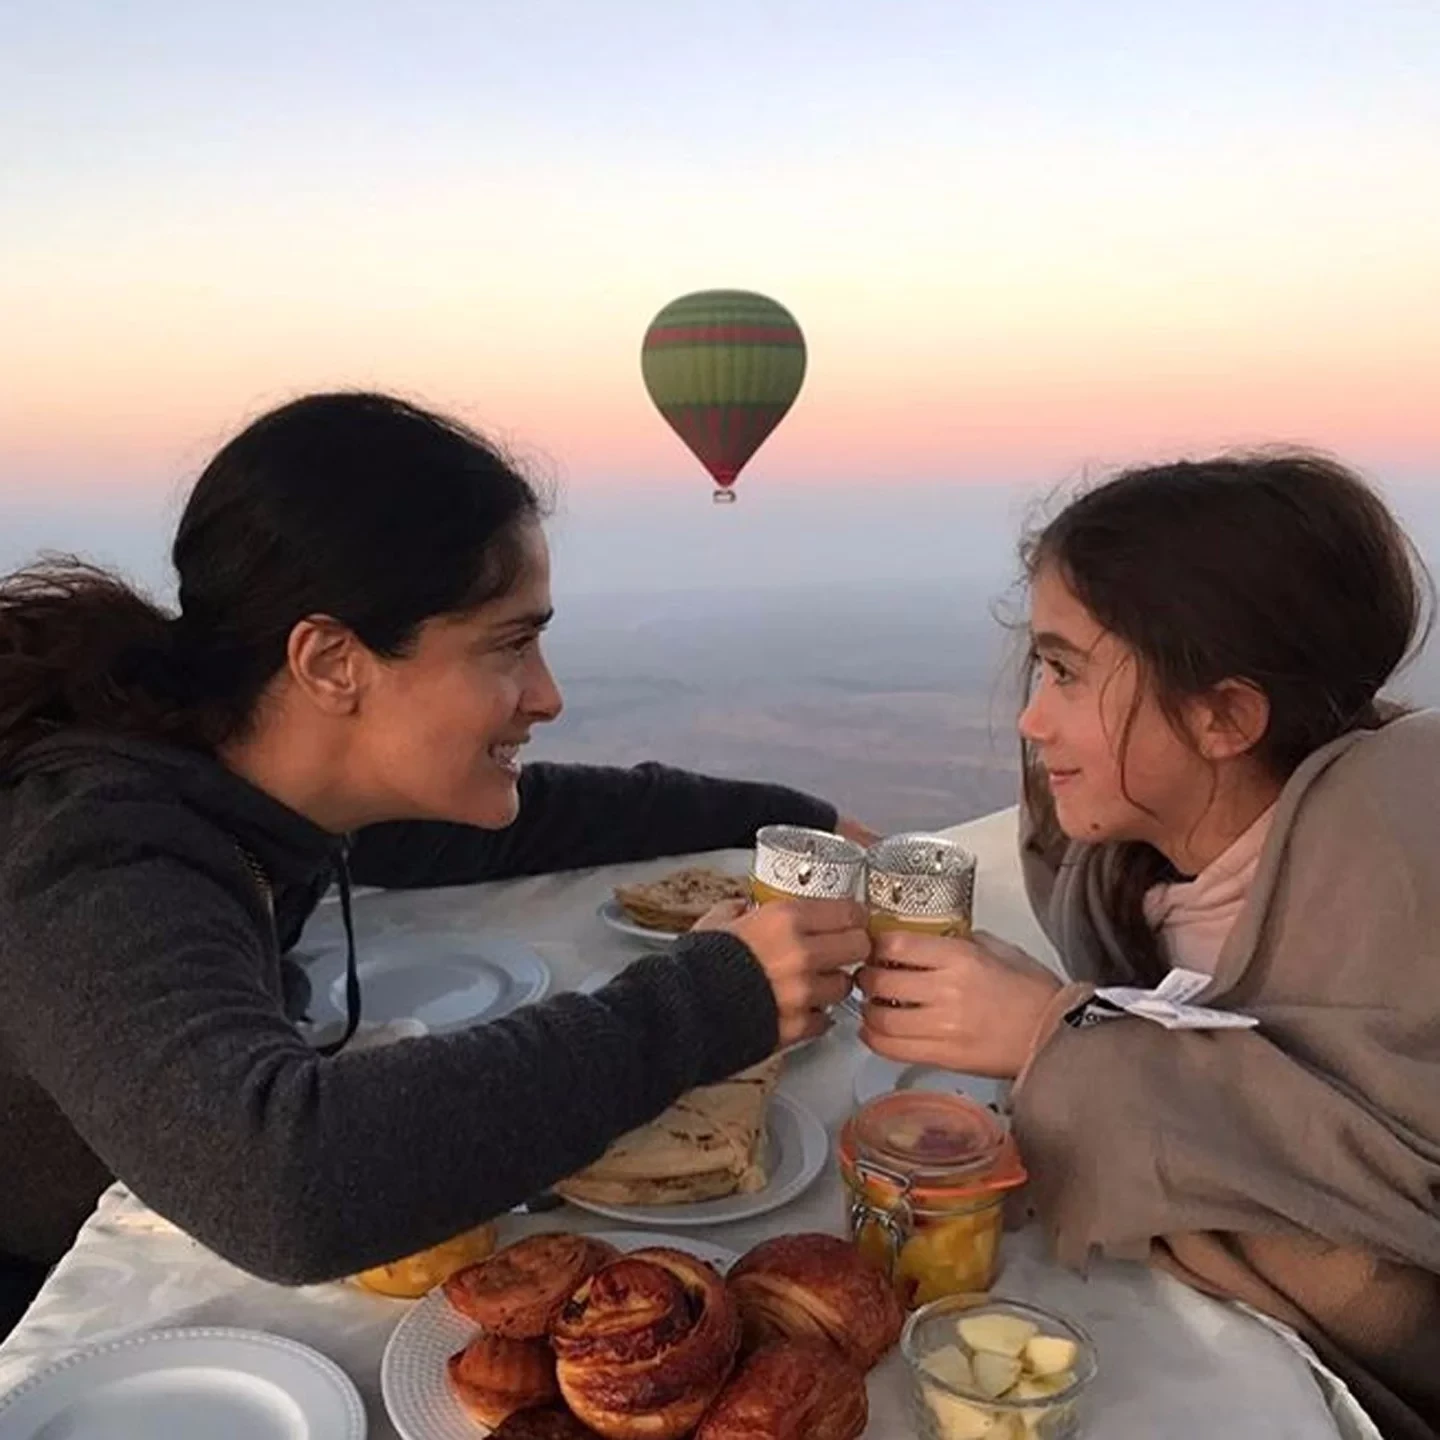 Salma Hayek with daughter Valentina Paloma Pinault